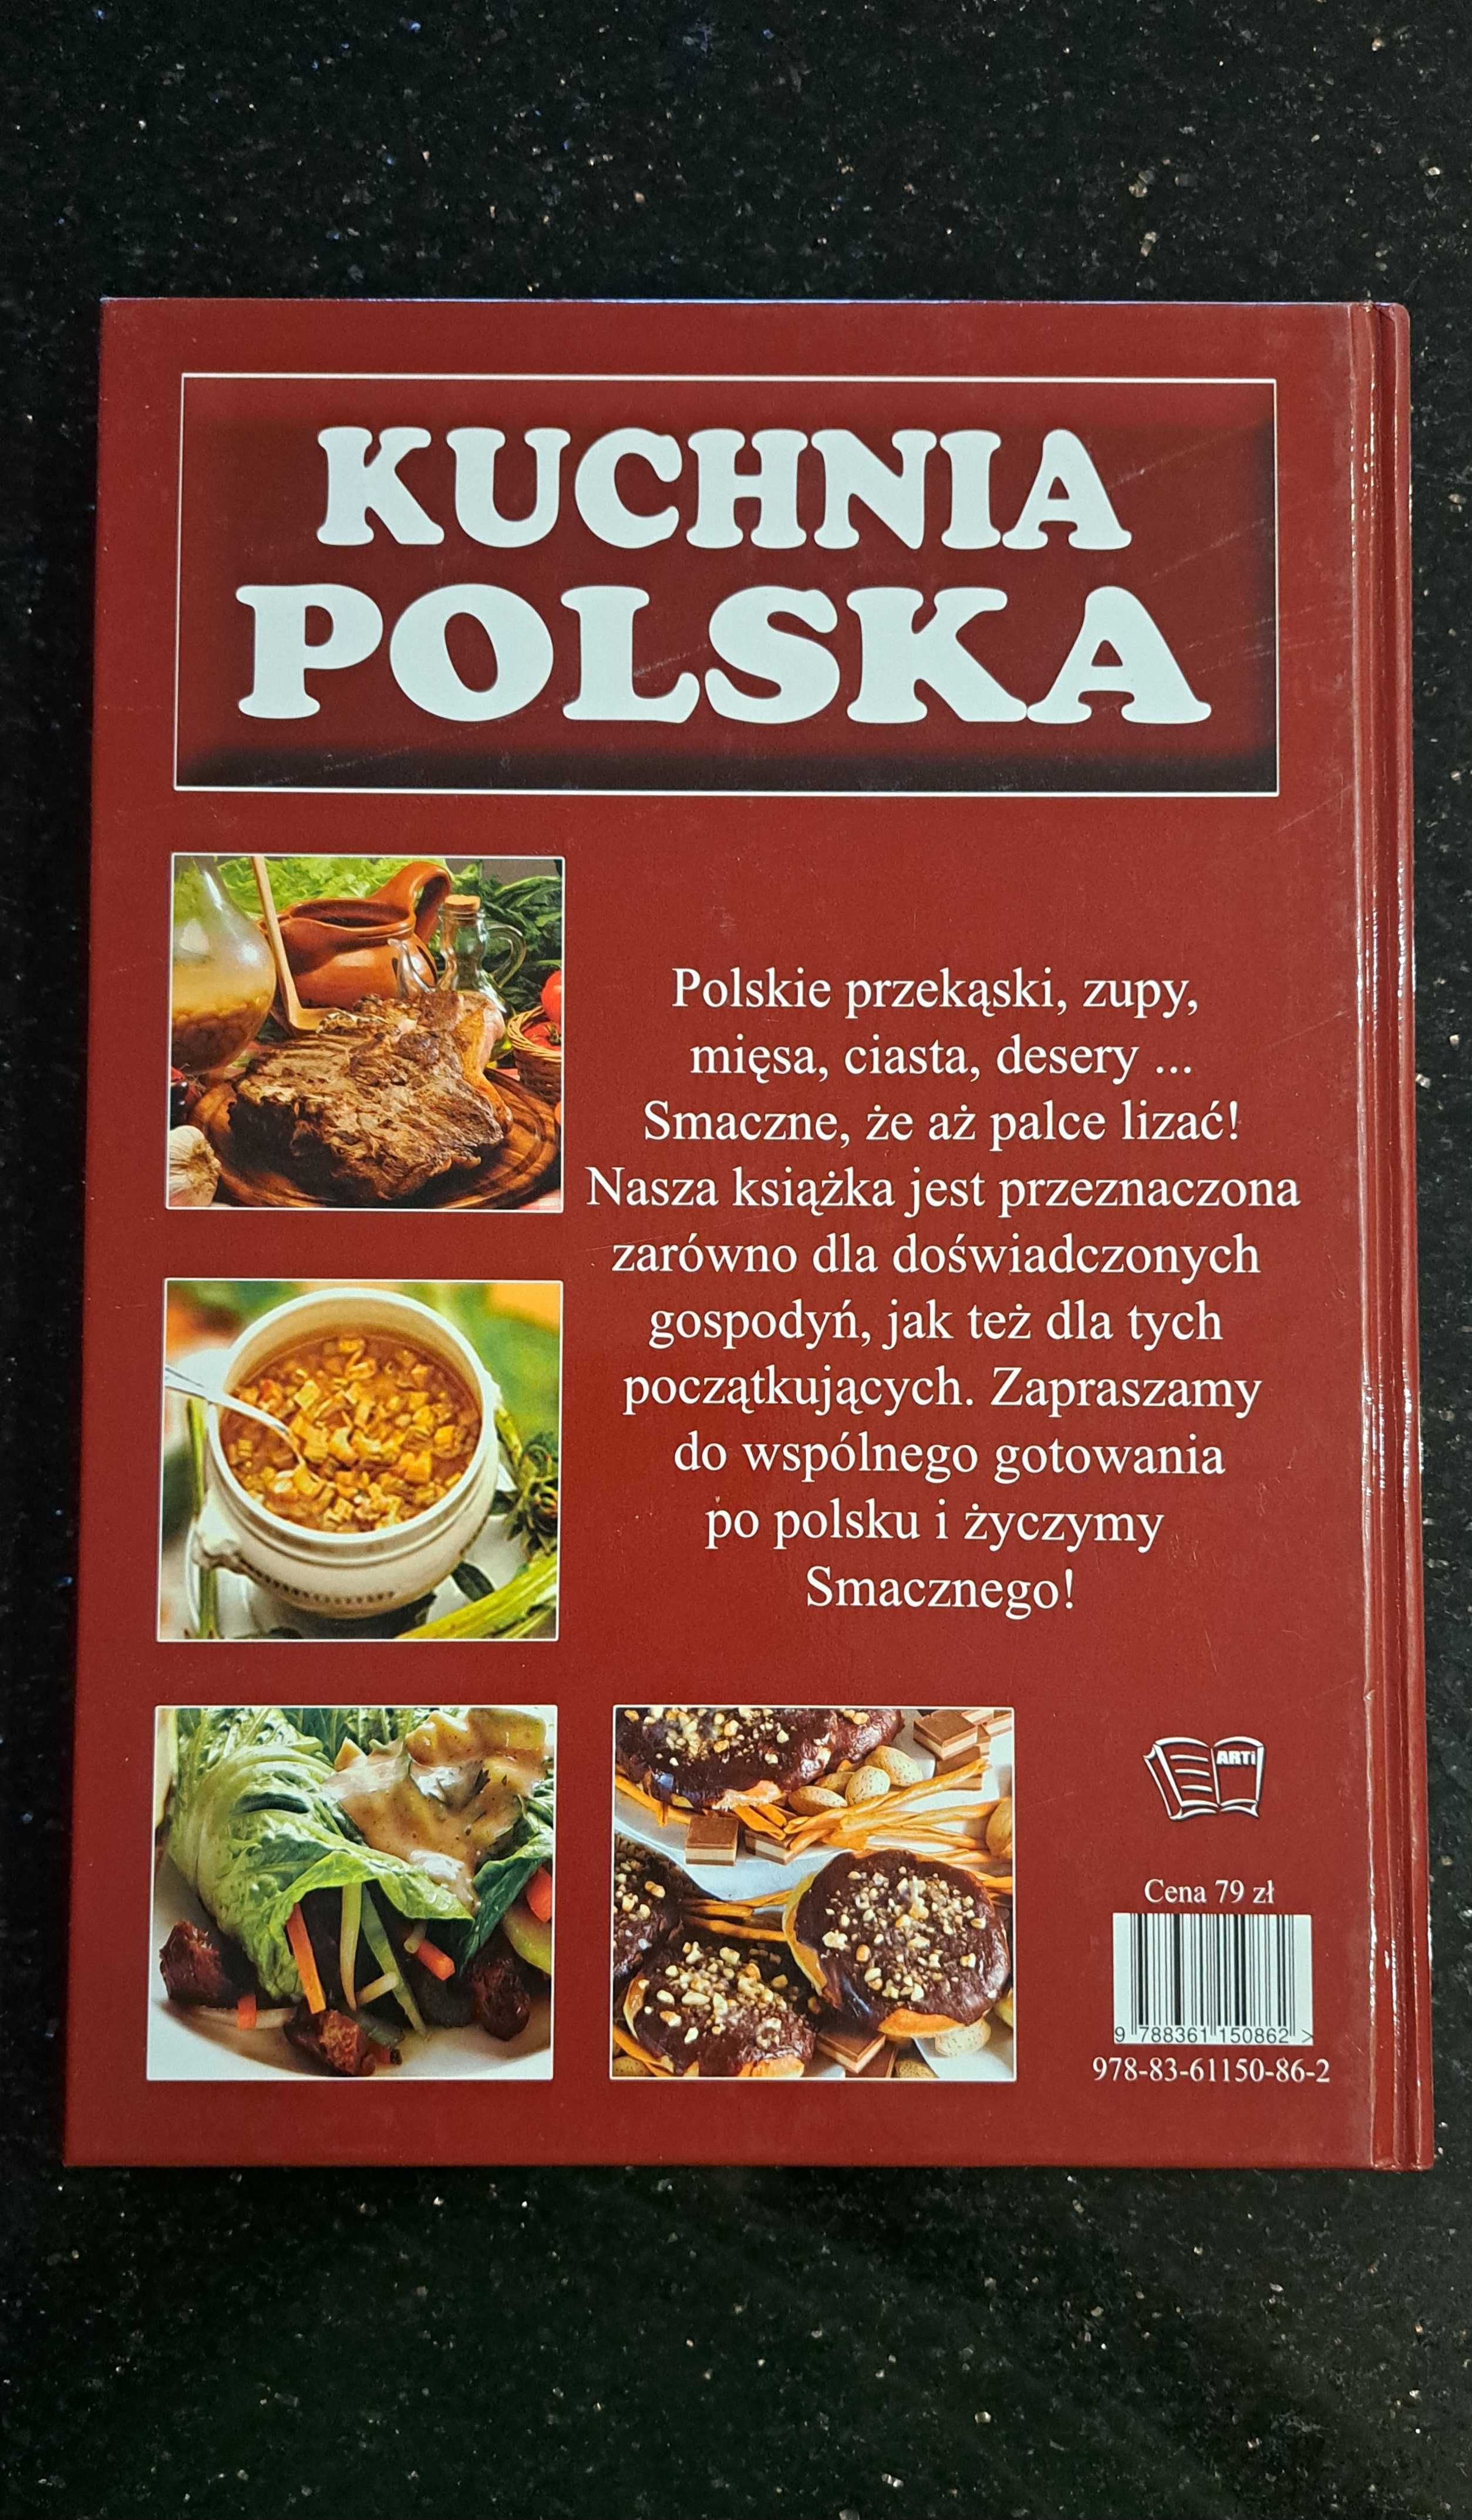 Kuchnia polska książka kucharska